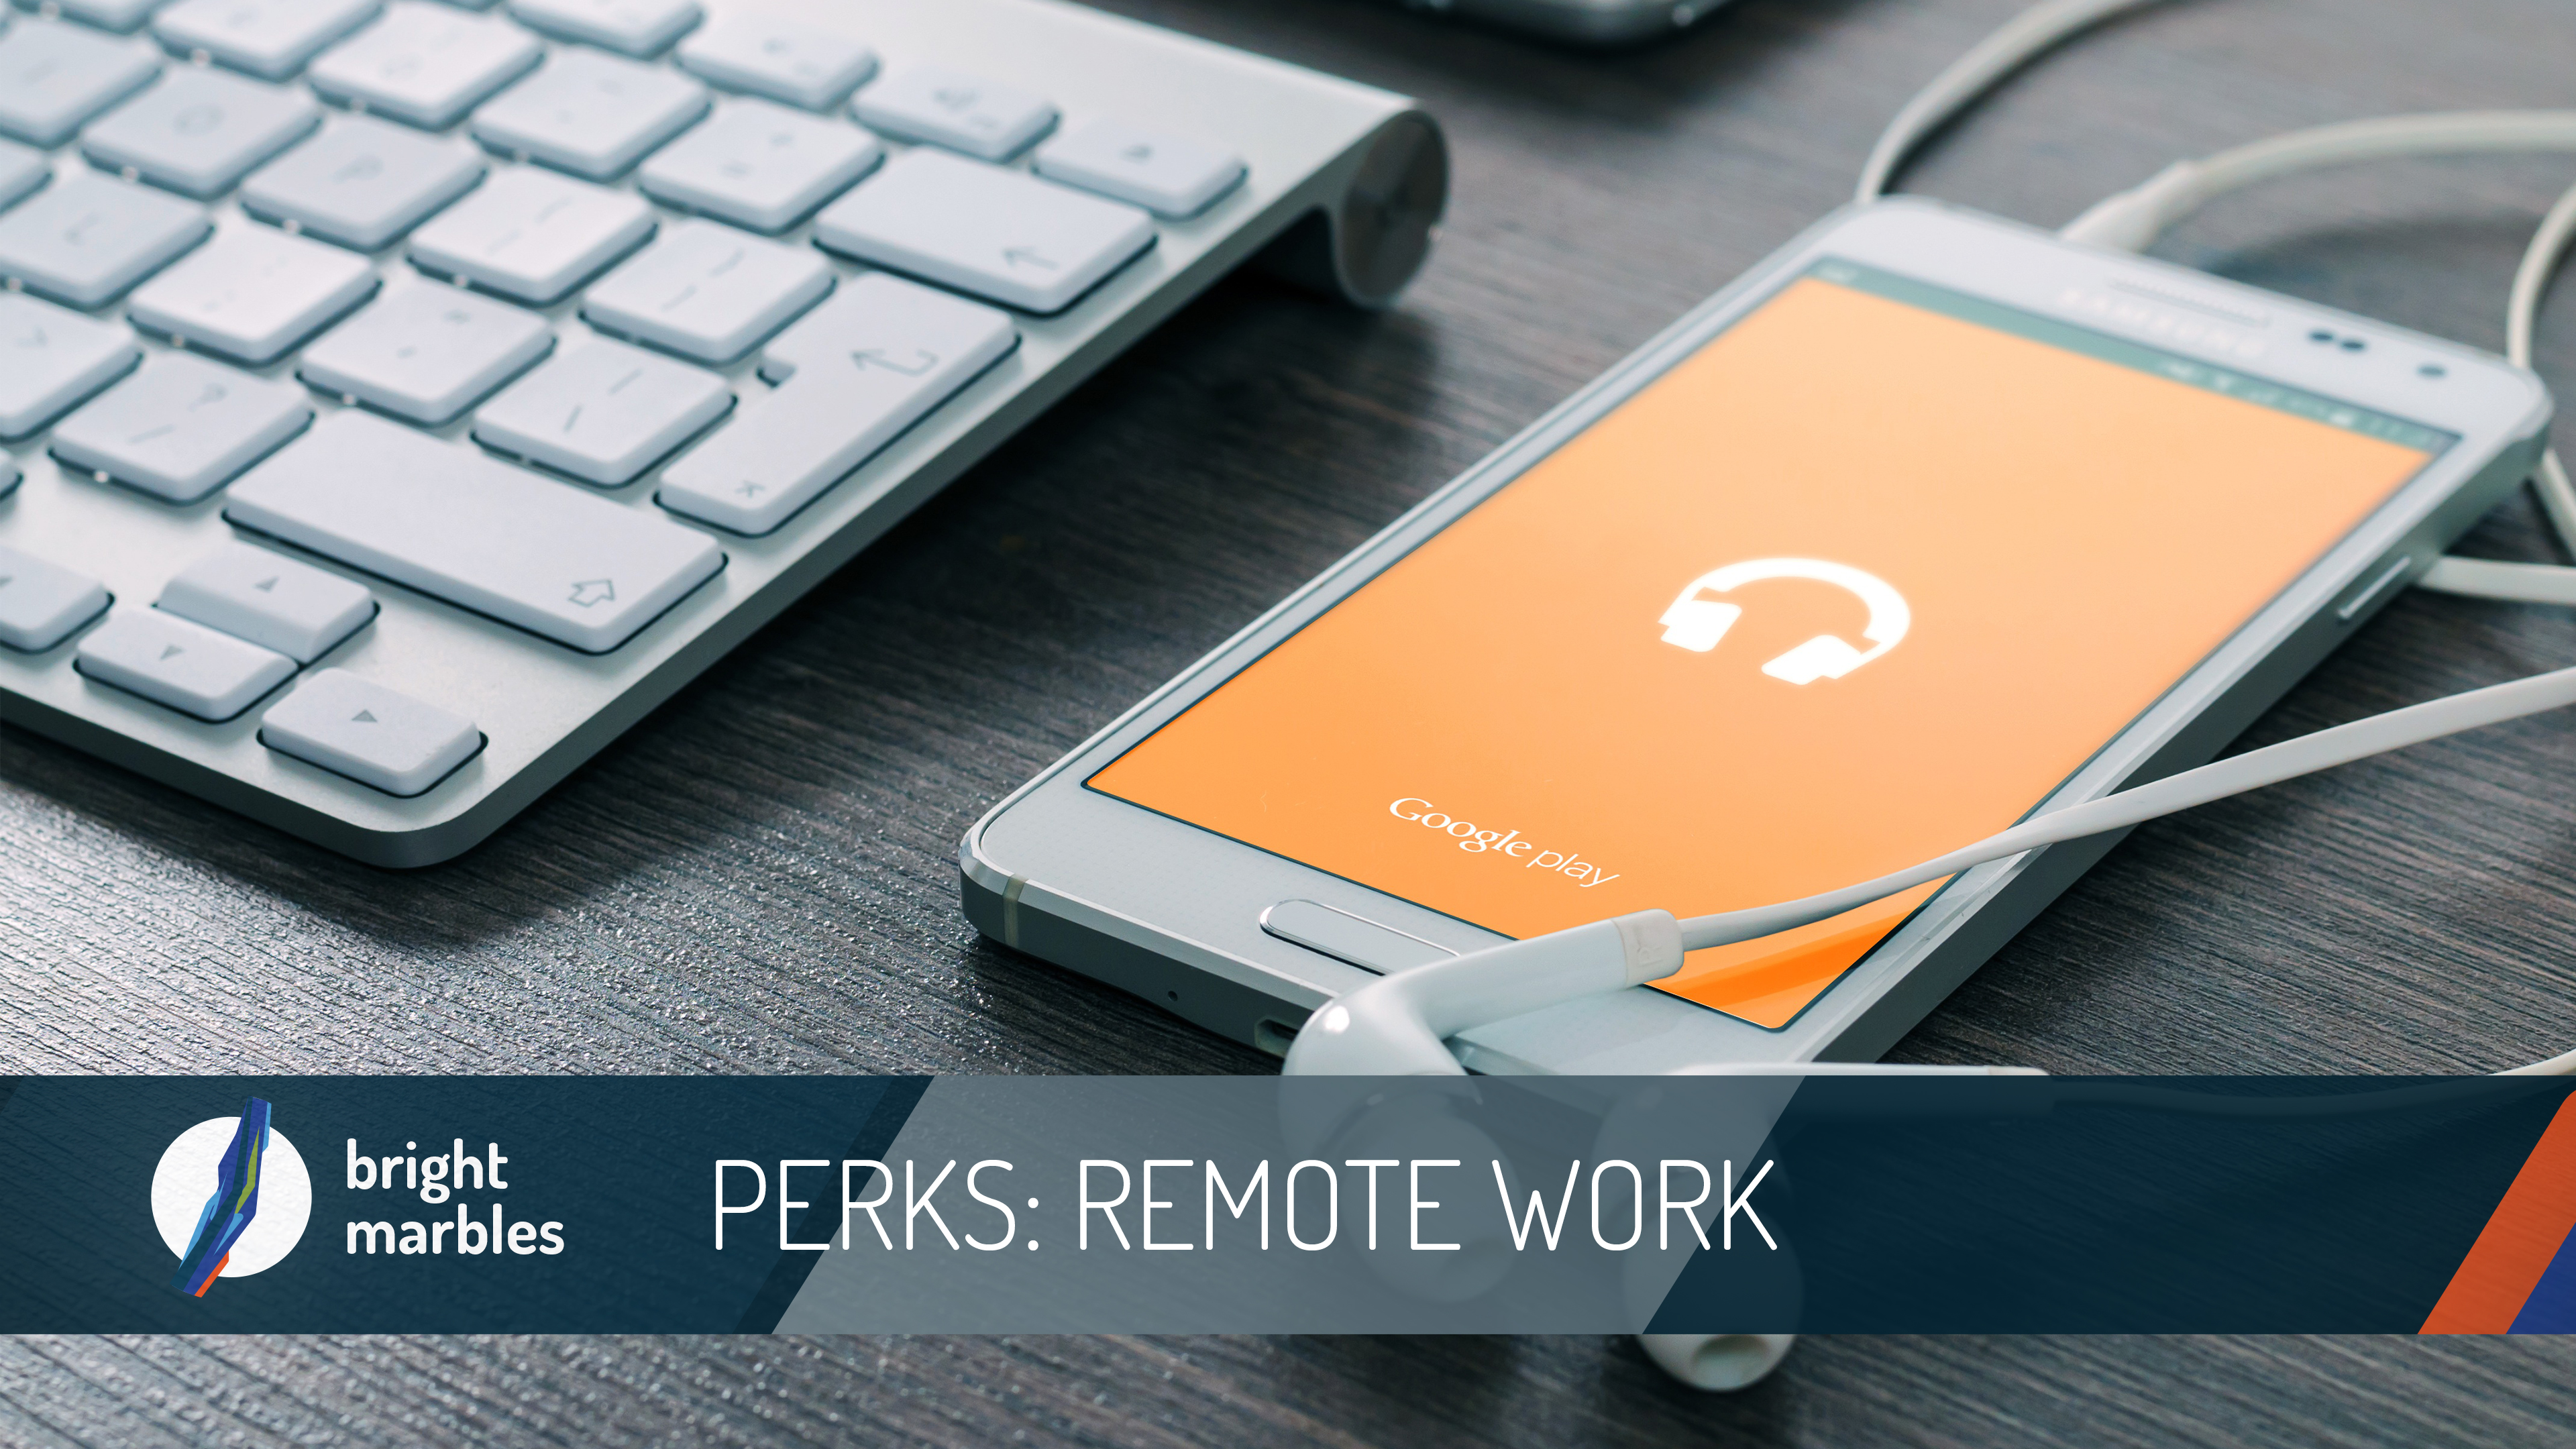 Perks: Remote work